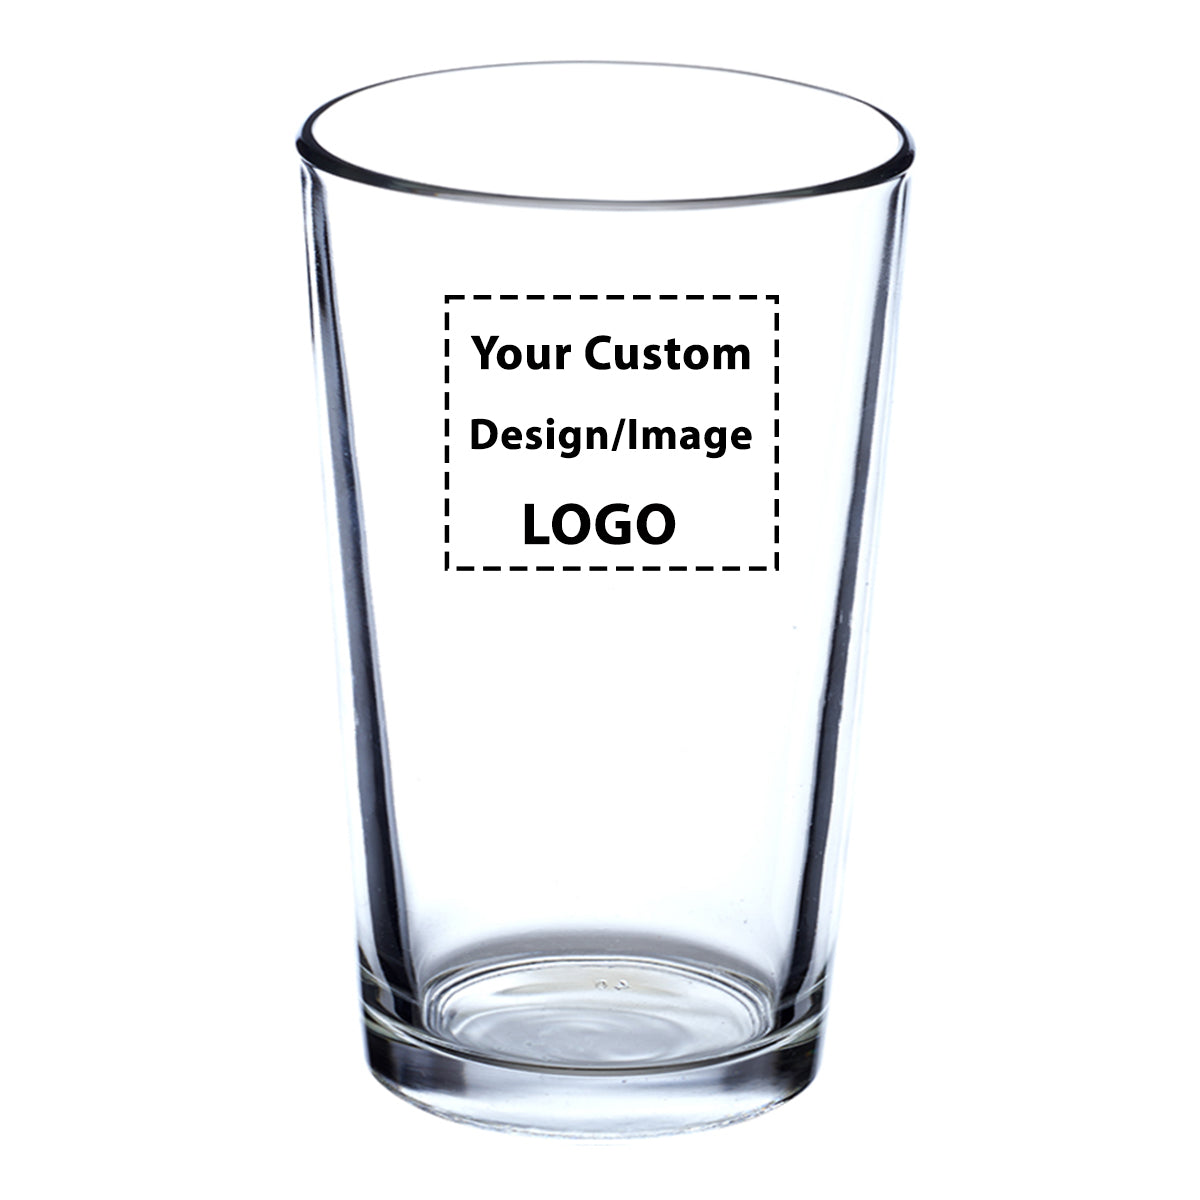 Custom Design/Image/Logo Designed Beer & Water Glasses